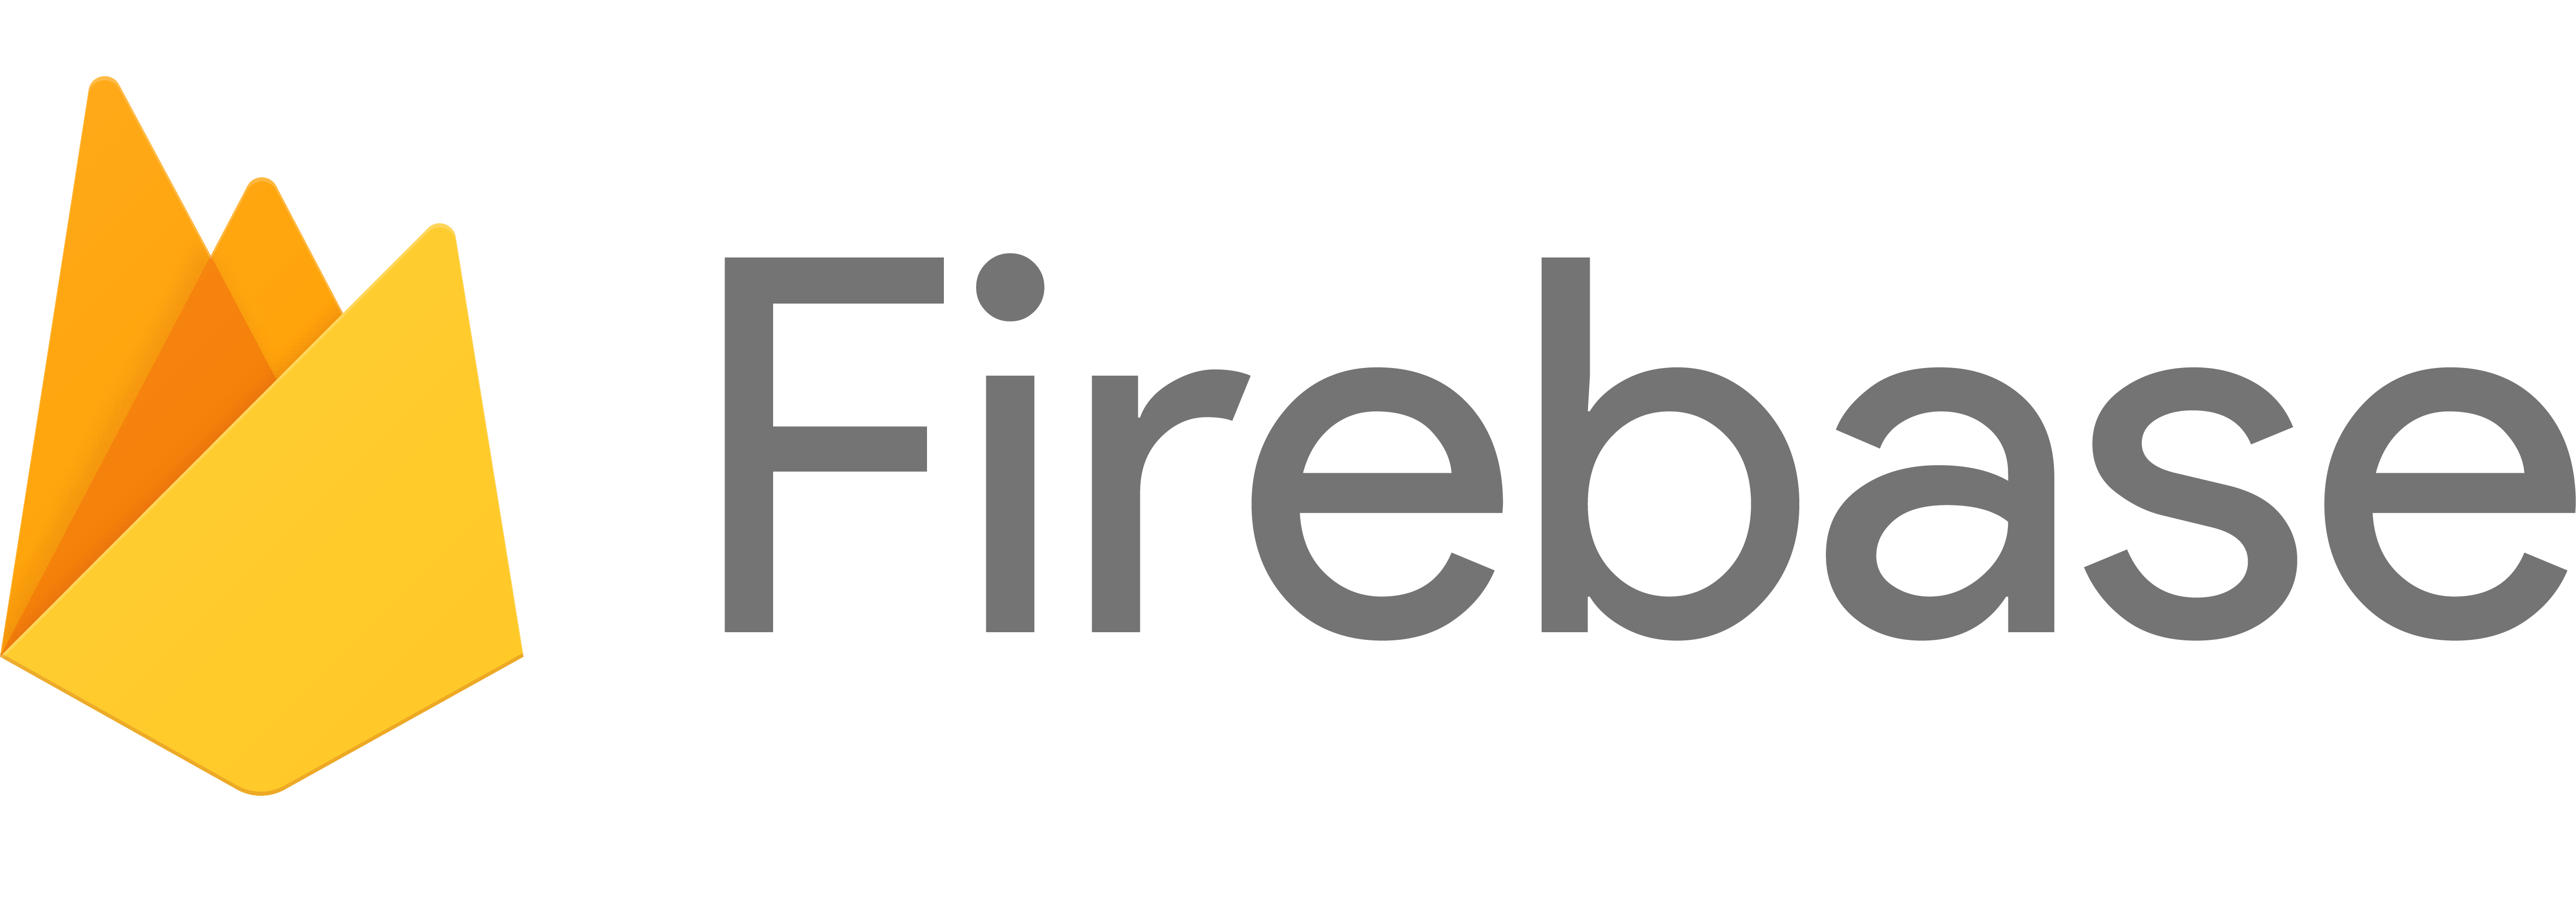 Firebase Logo - Introducing a new gold sponsor: Firebase